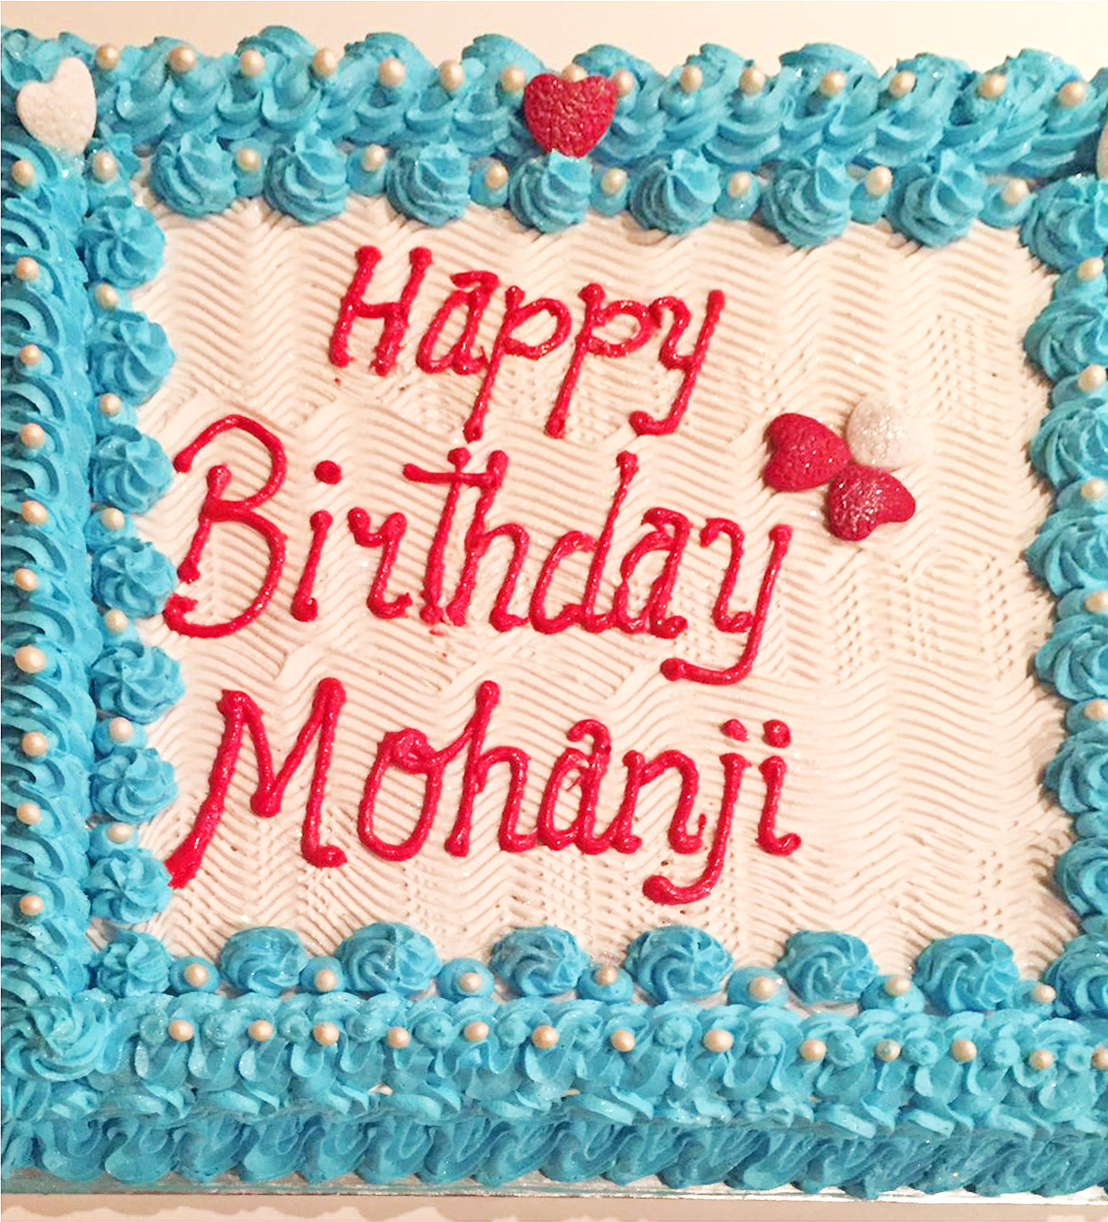 Johannesburg Mohanjis birthday cake 2016 1